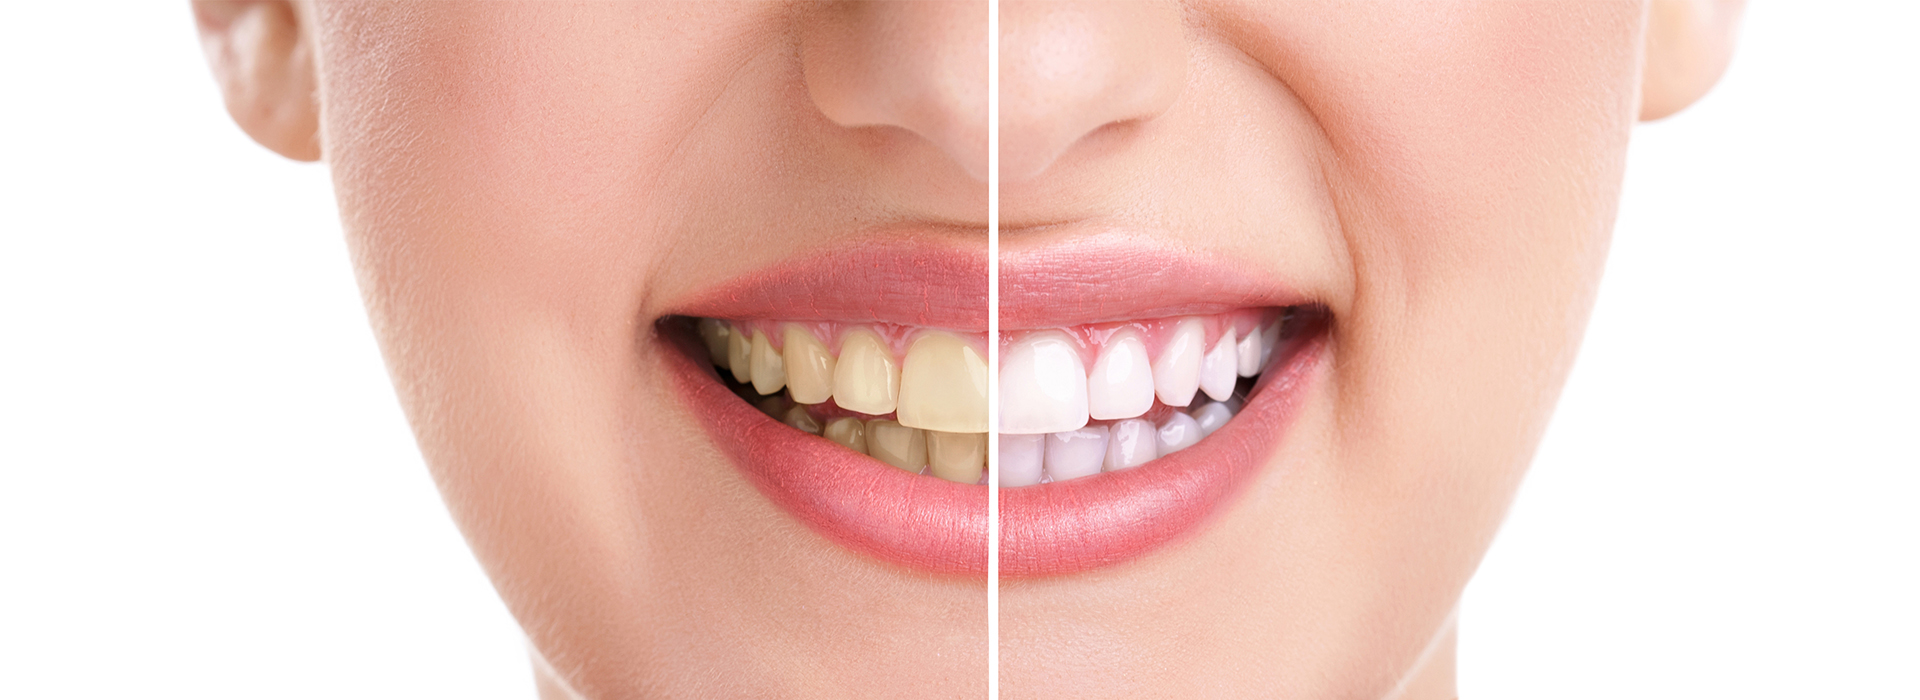 Napa Dental | Implant Dentistry, Dental Cleanings and Teeth Whitening